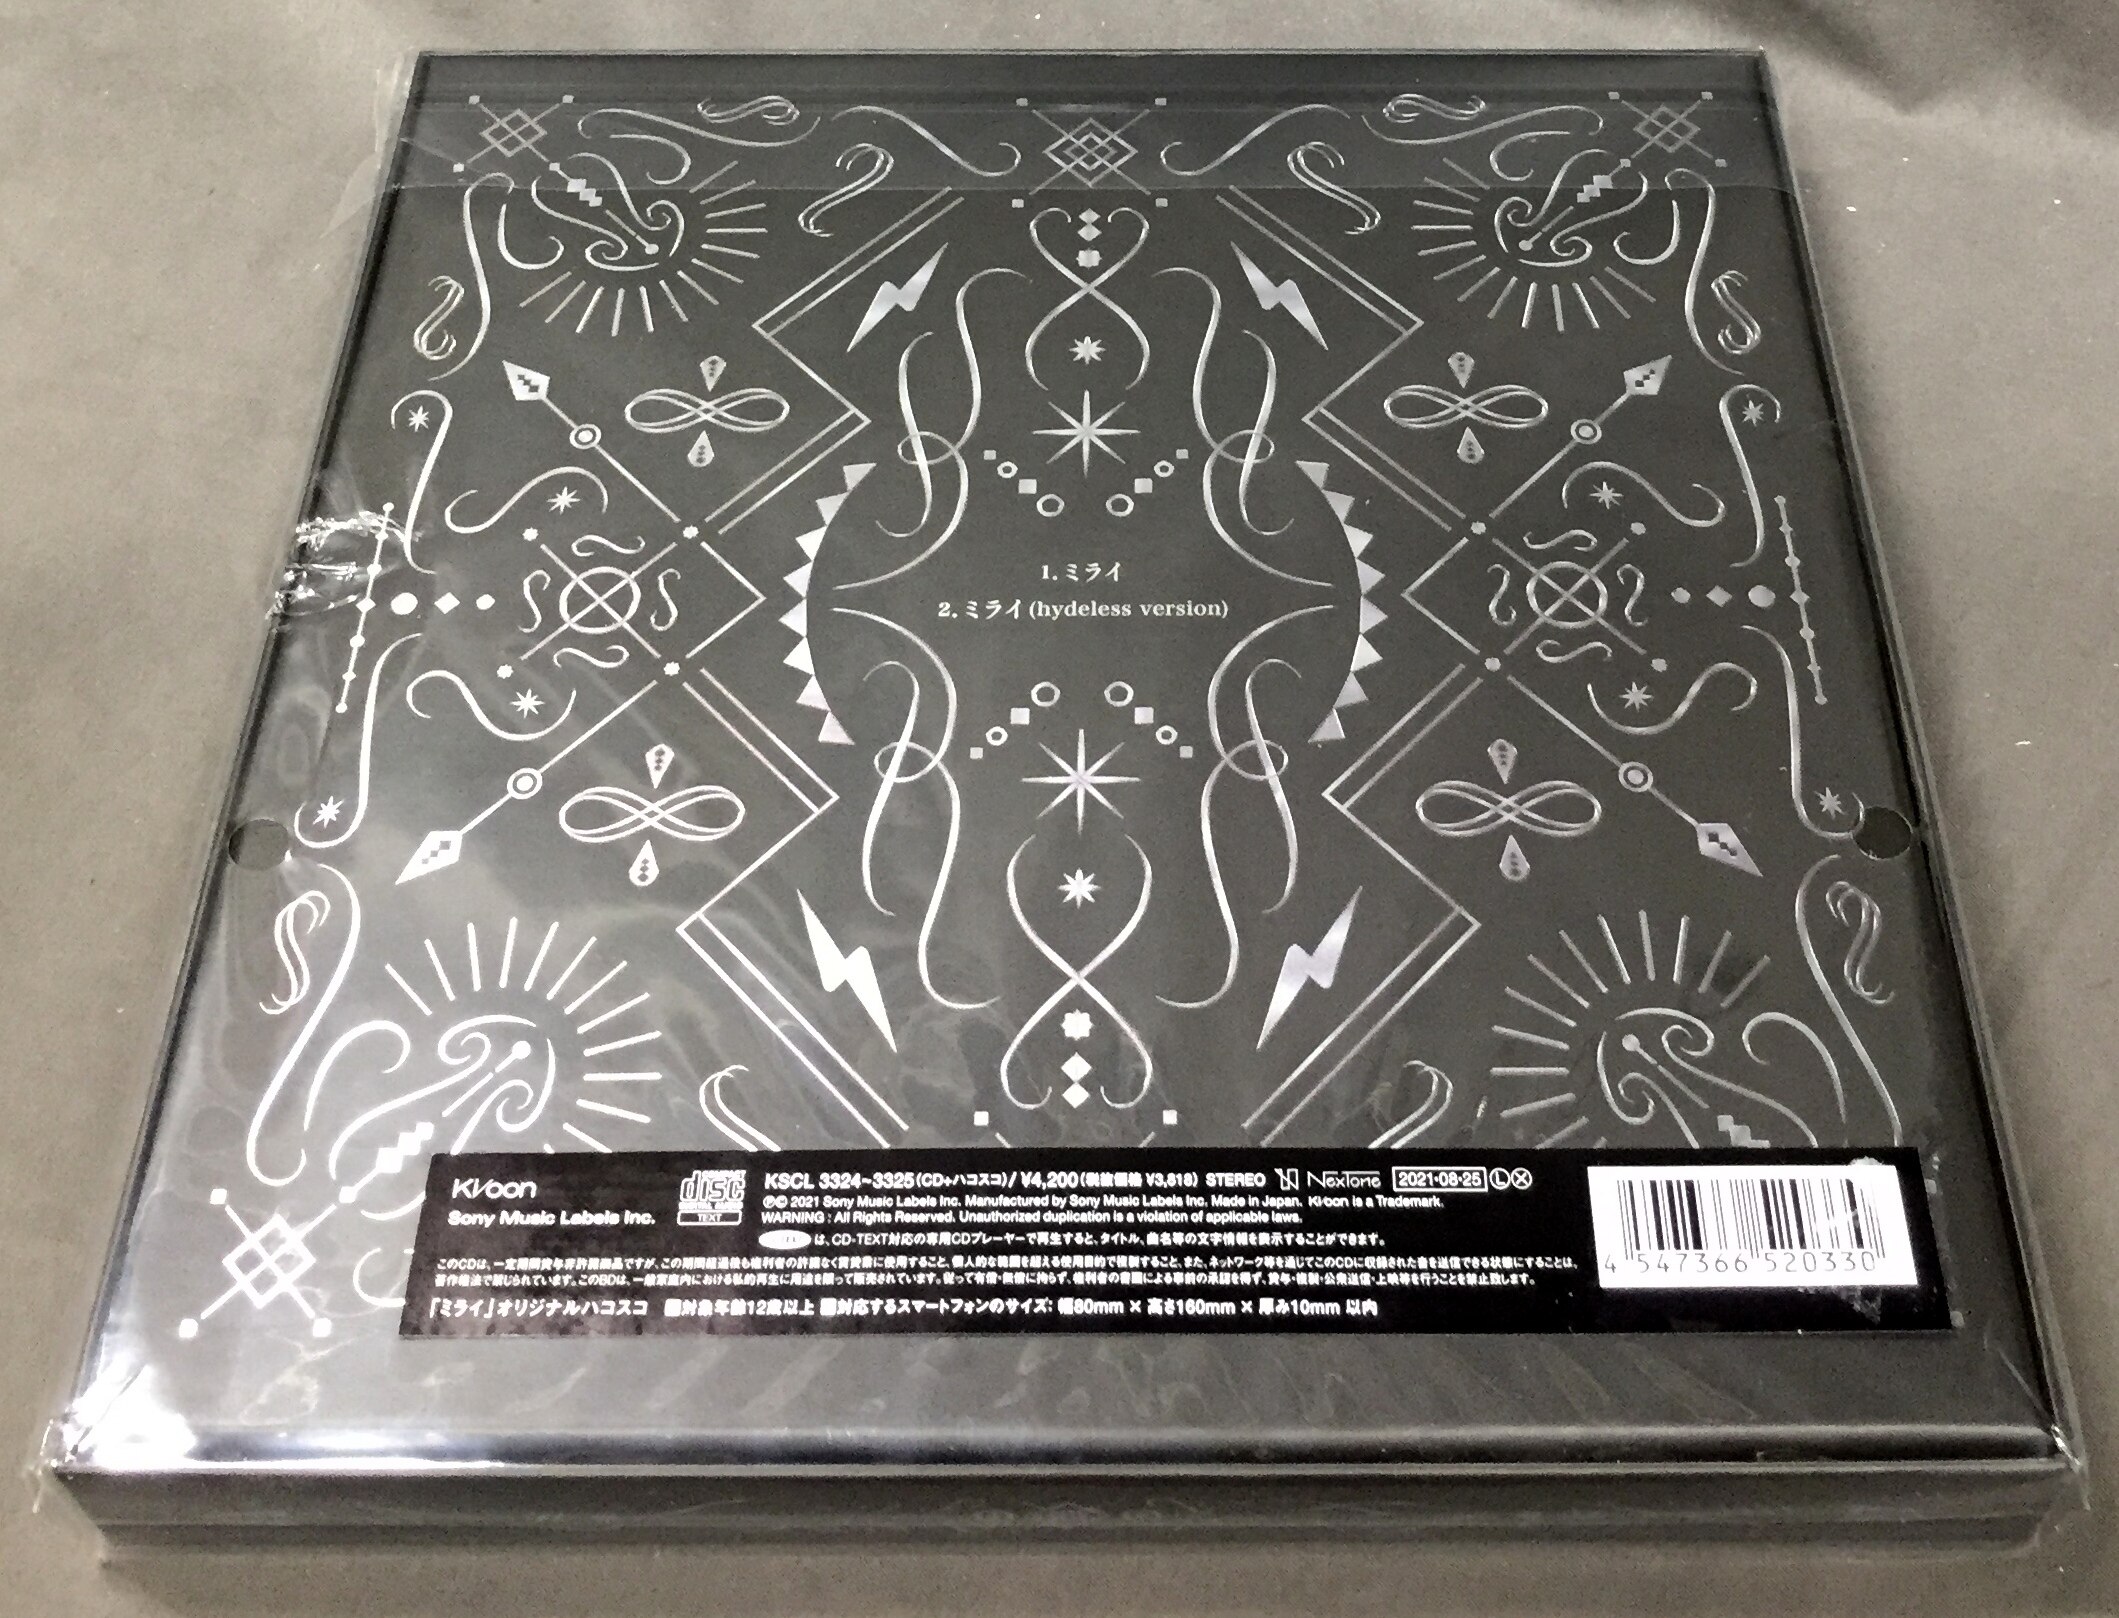 L'Arc～en～Ciel 完全生産限定盤(CD+ハコスコ) ミライ (Amazon.co.jp 